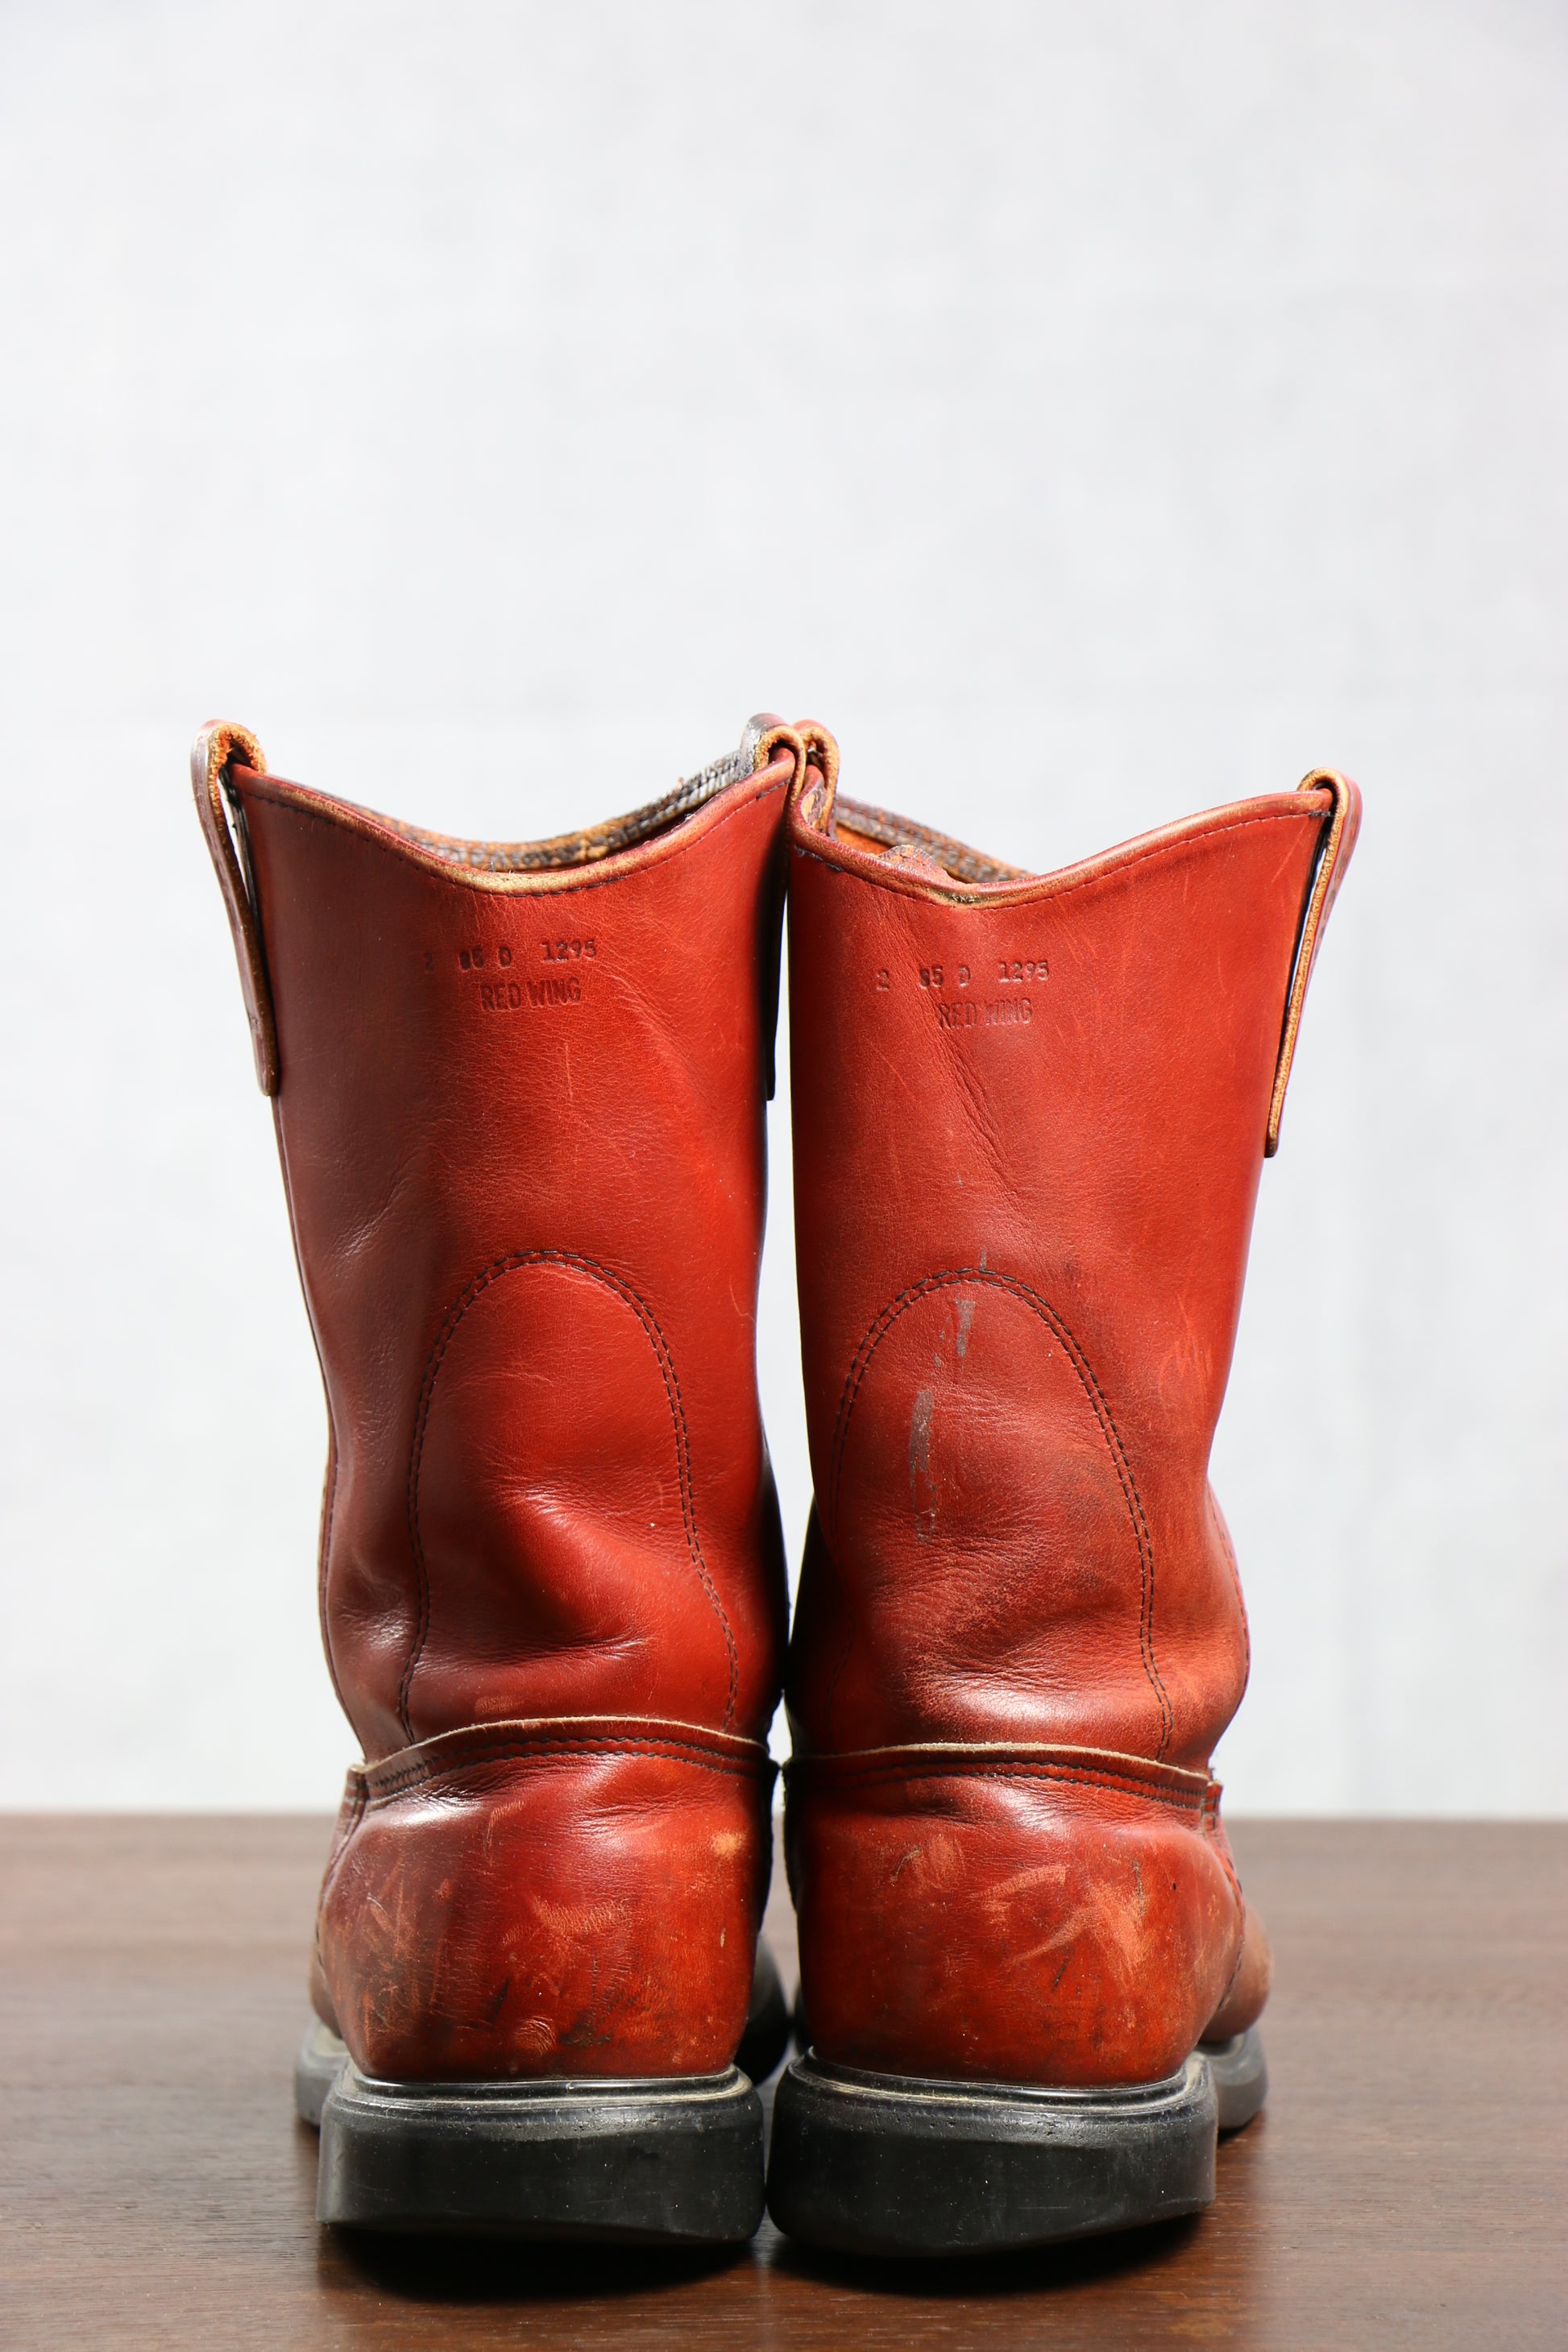 Red Wing Pecos Boots, clochard92.com